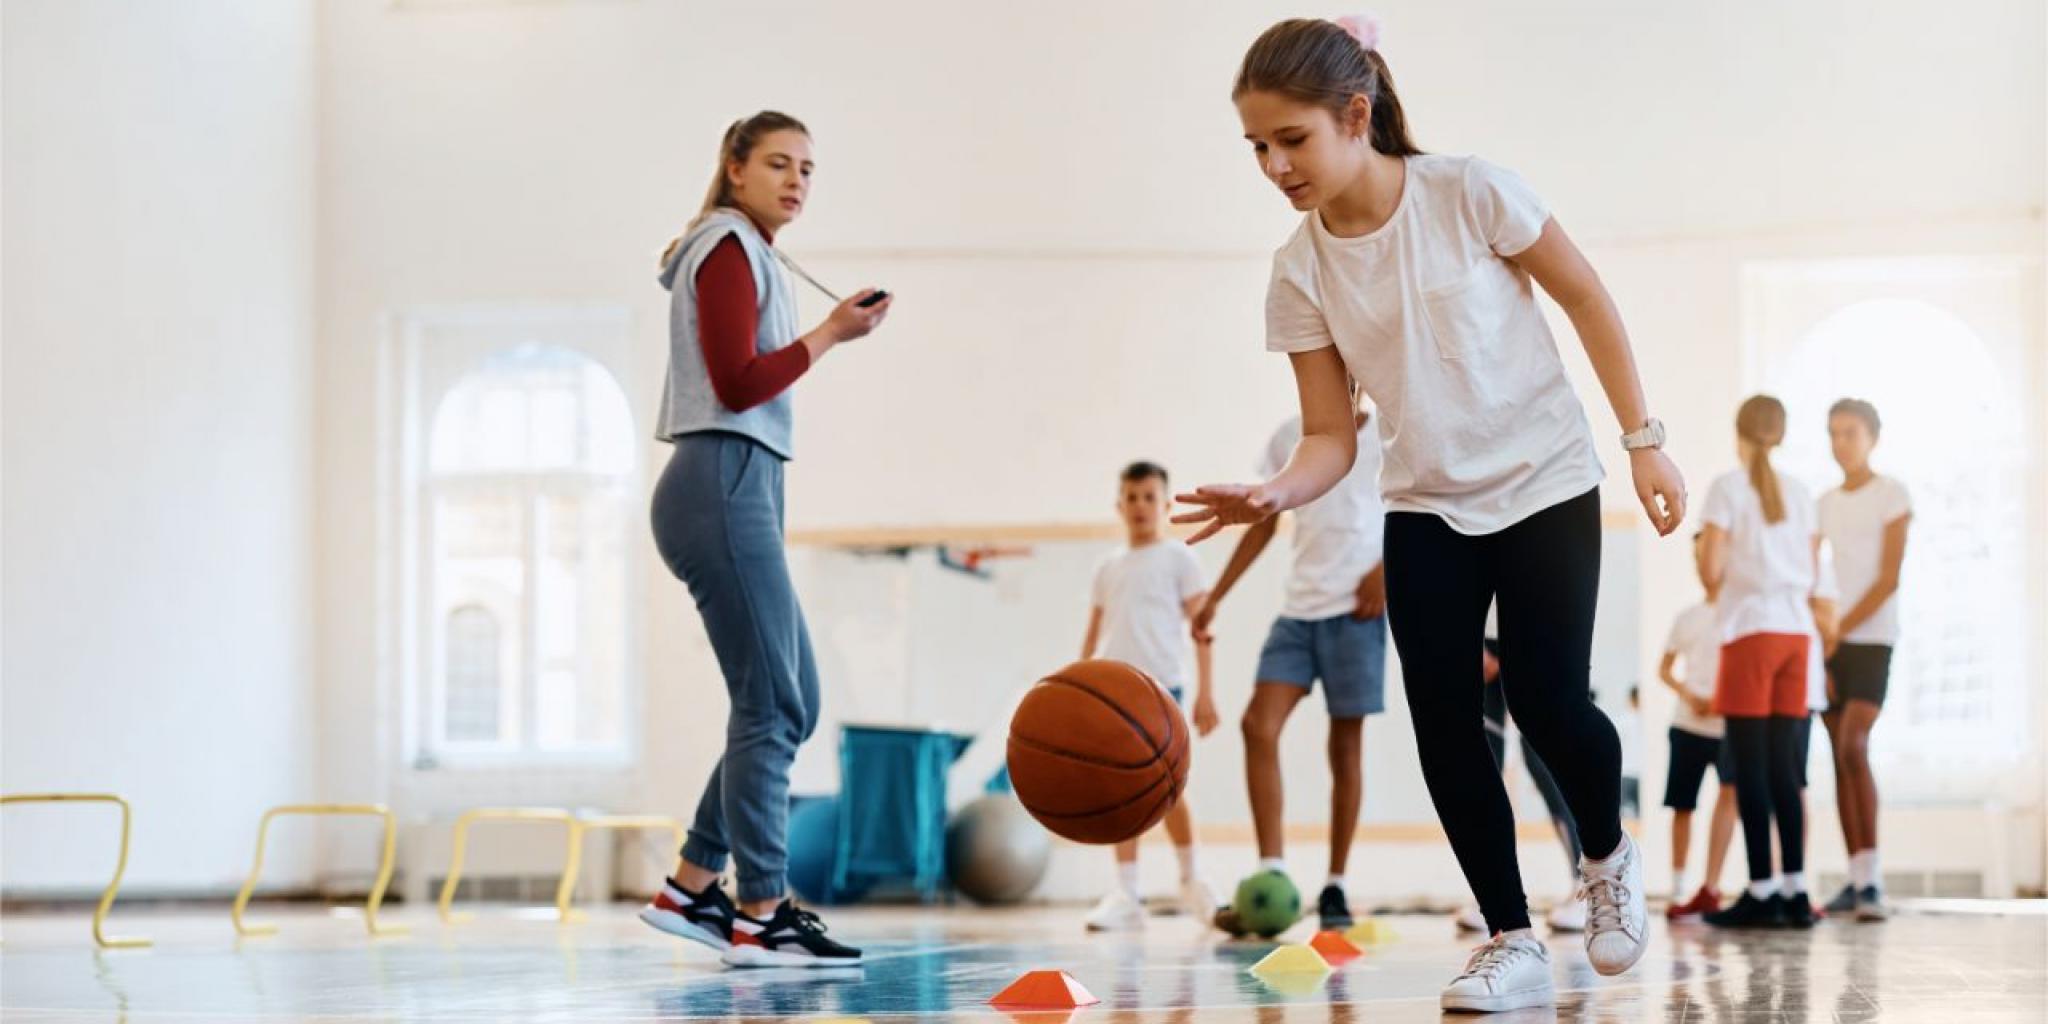 gymmen-basketballen-leerling-gymzaal-bb.jpg